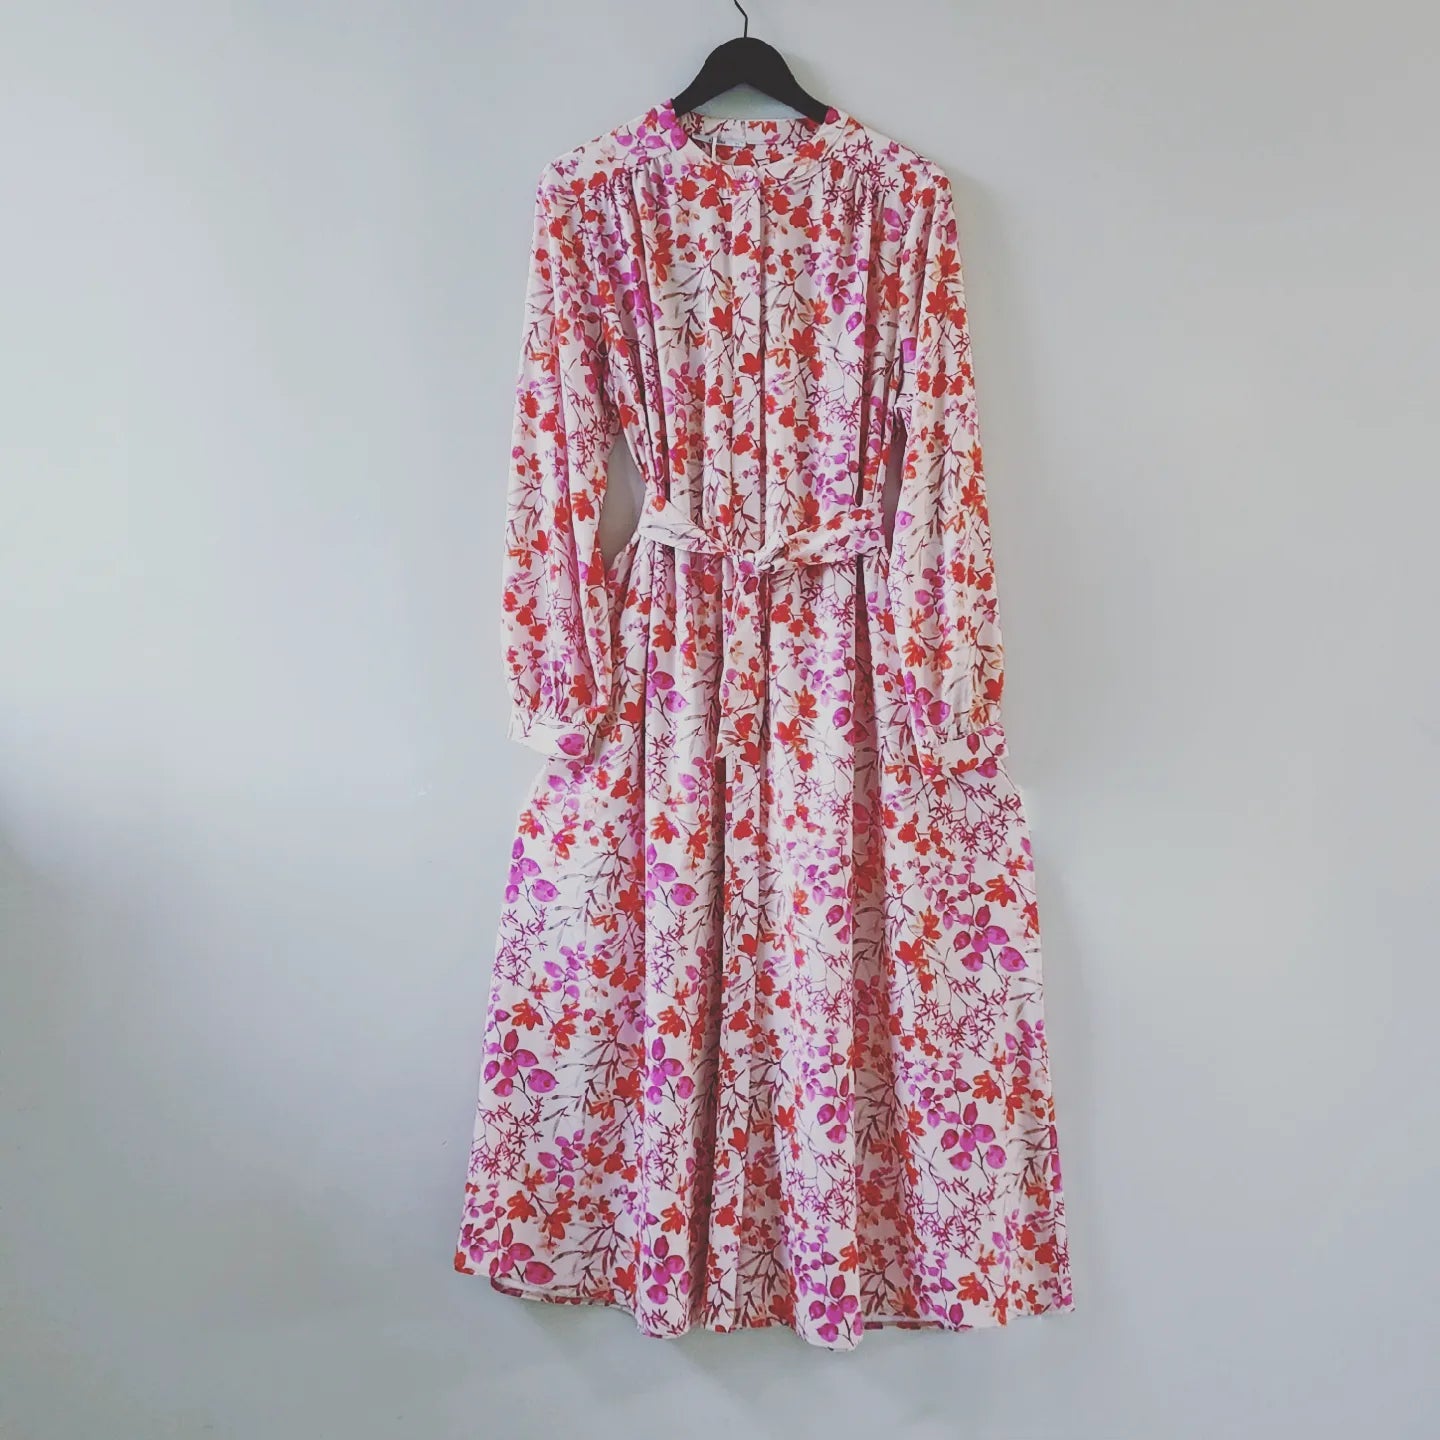 Armine floral shirt dress